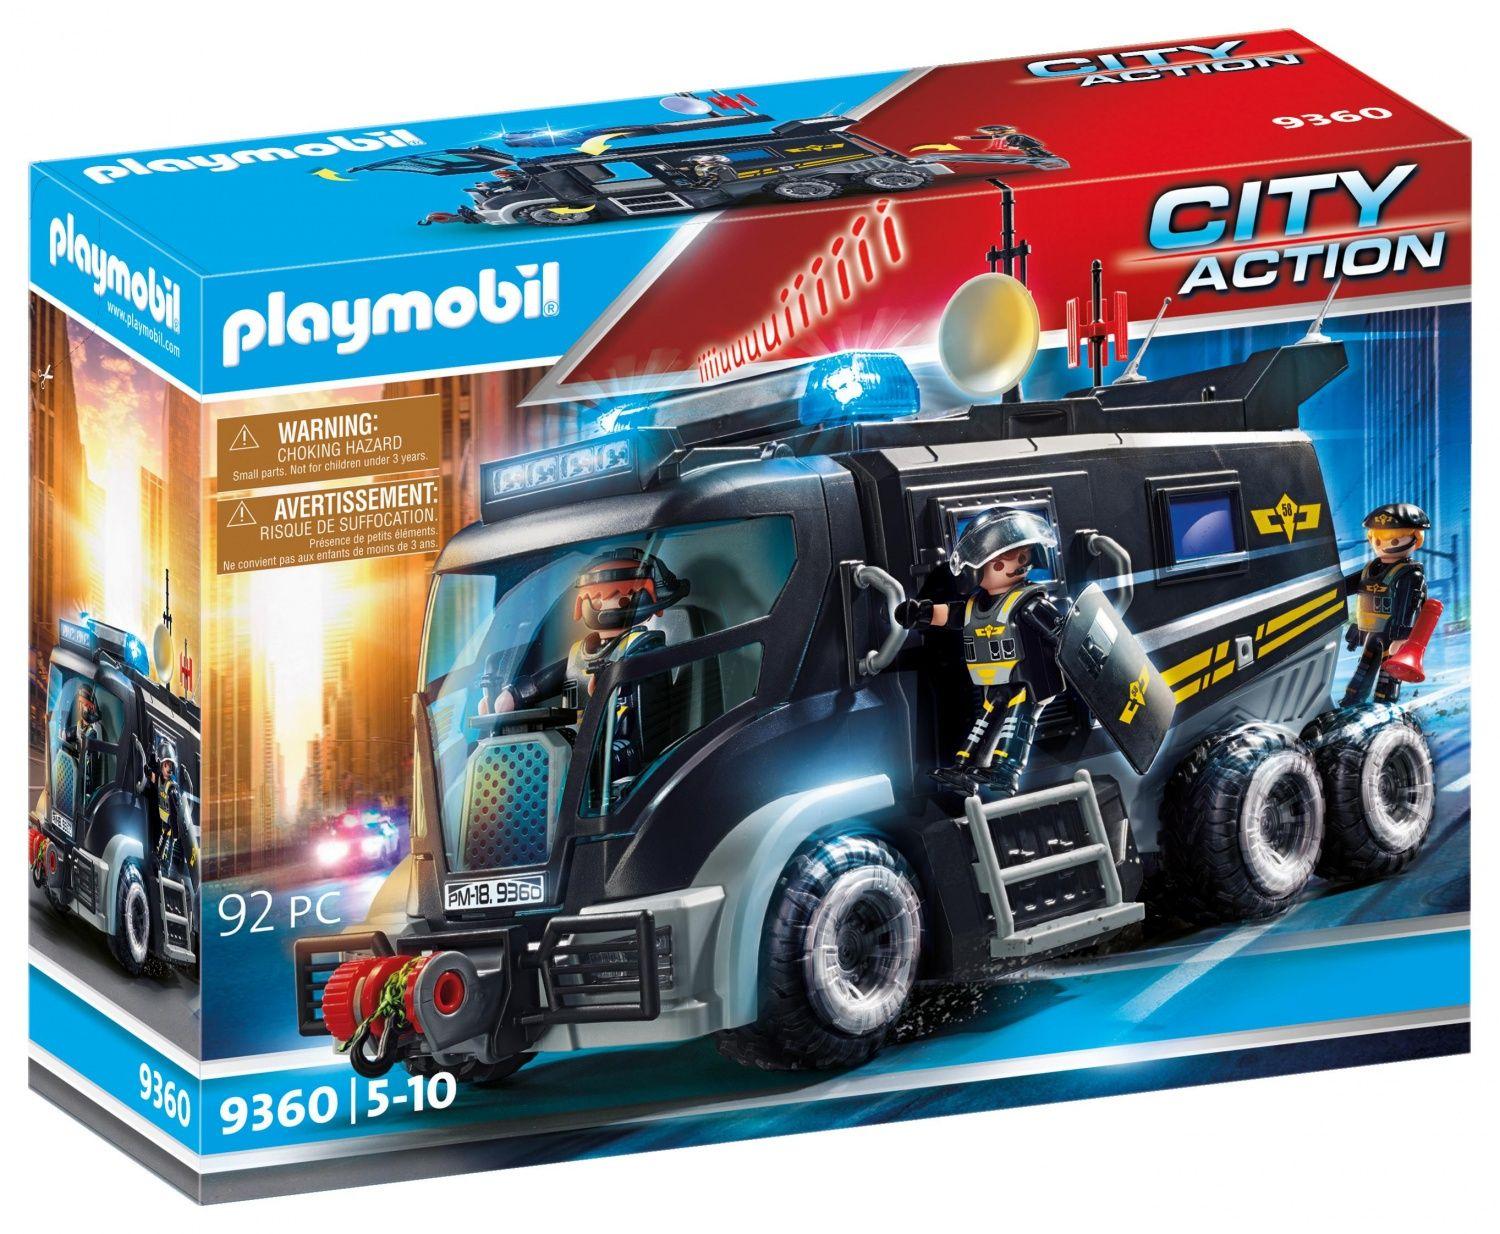 Playmobil 1.2.3 : Policier / Bateau PLAYMOBIL : Comparateur, Avis